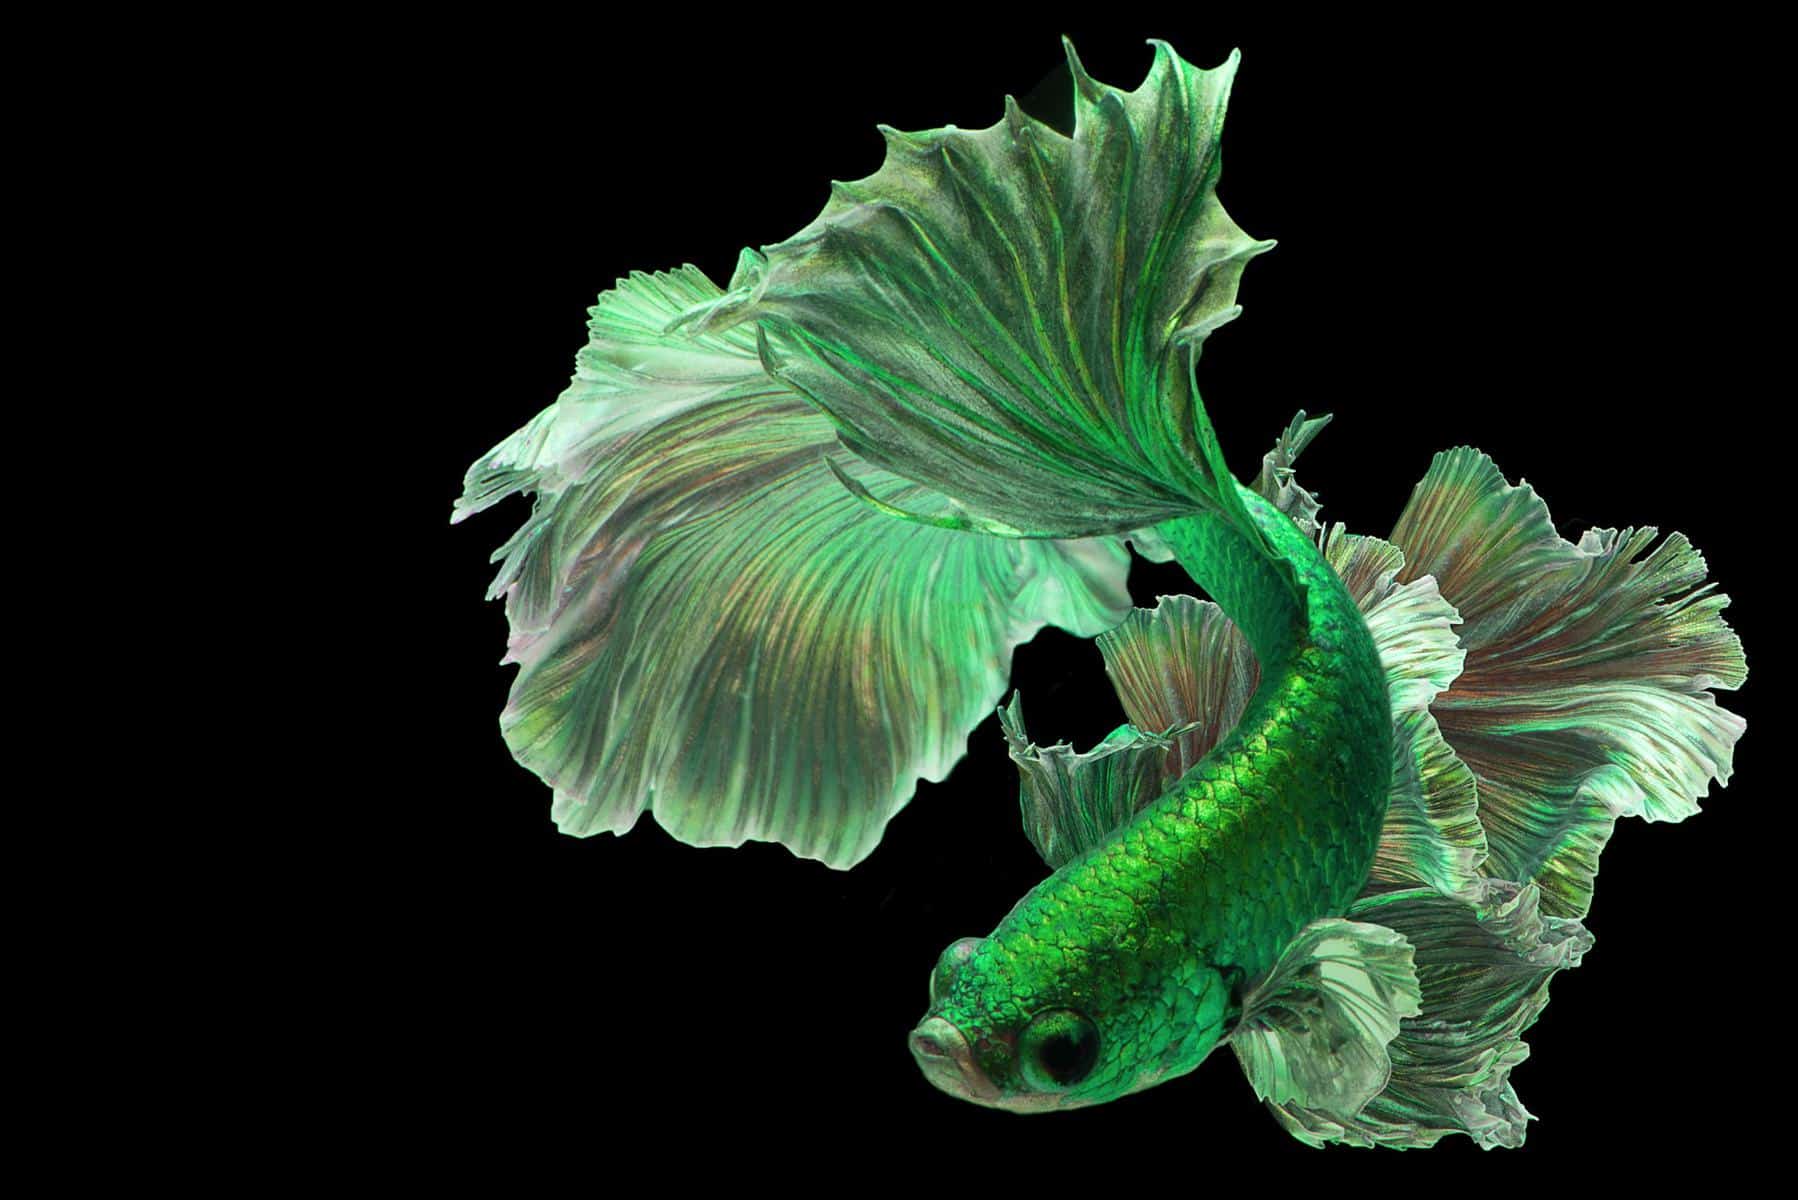 Are Green Betta Fish Real 74536 1 - Are Green Betta Fish Real?